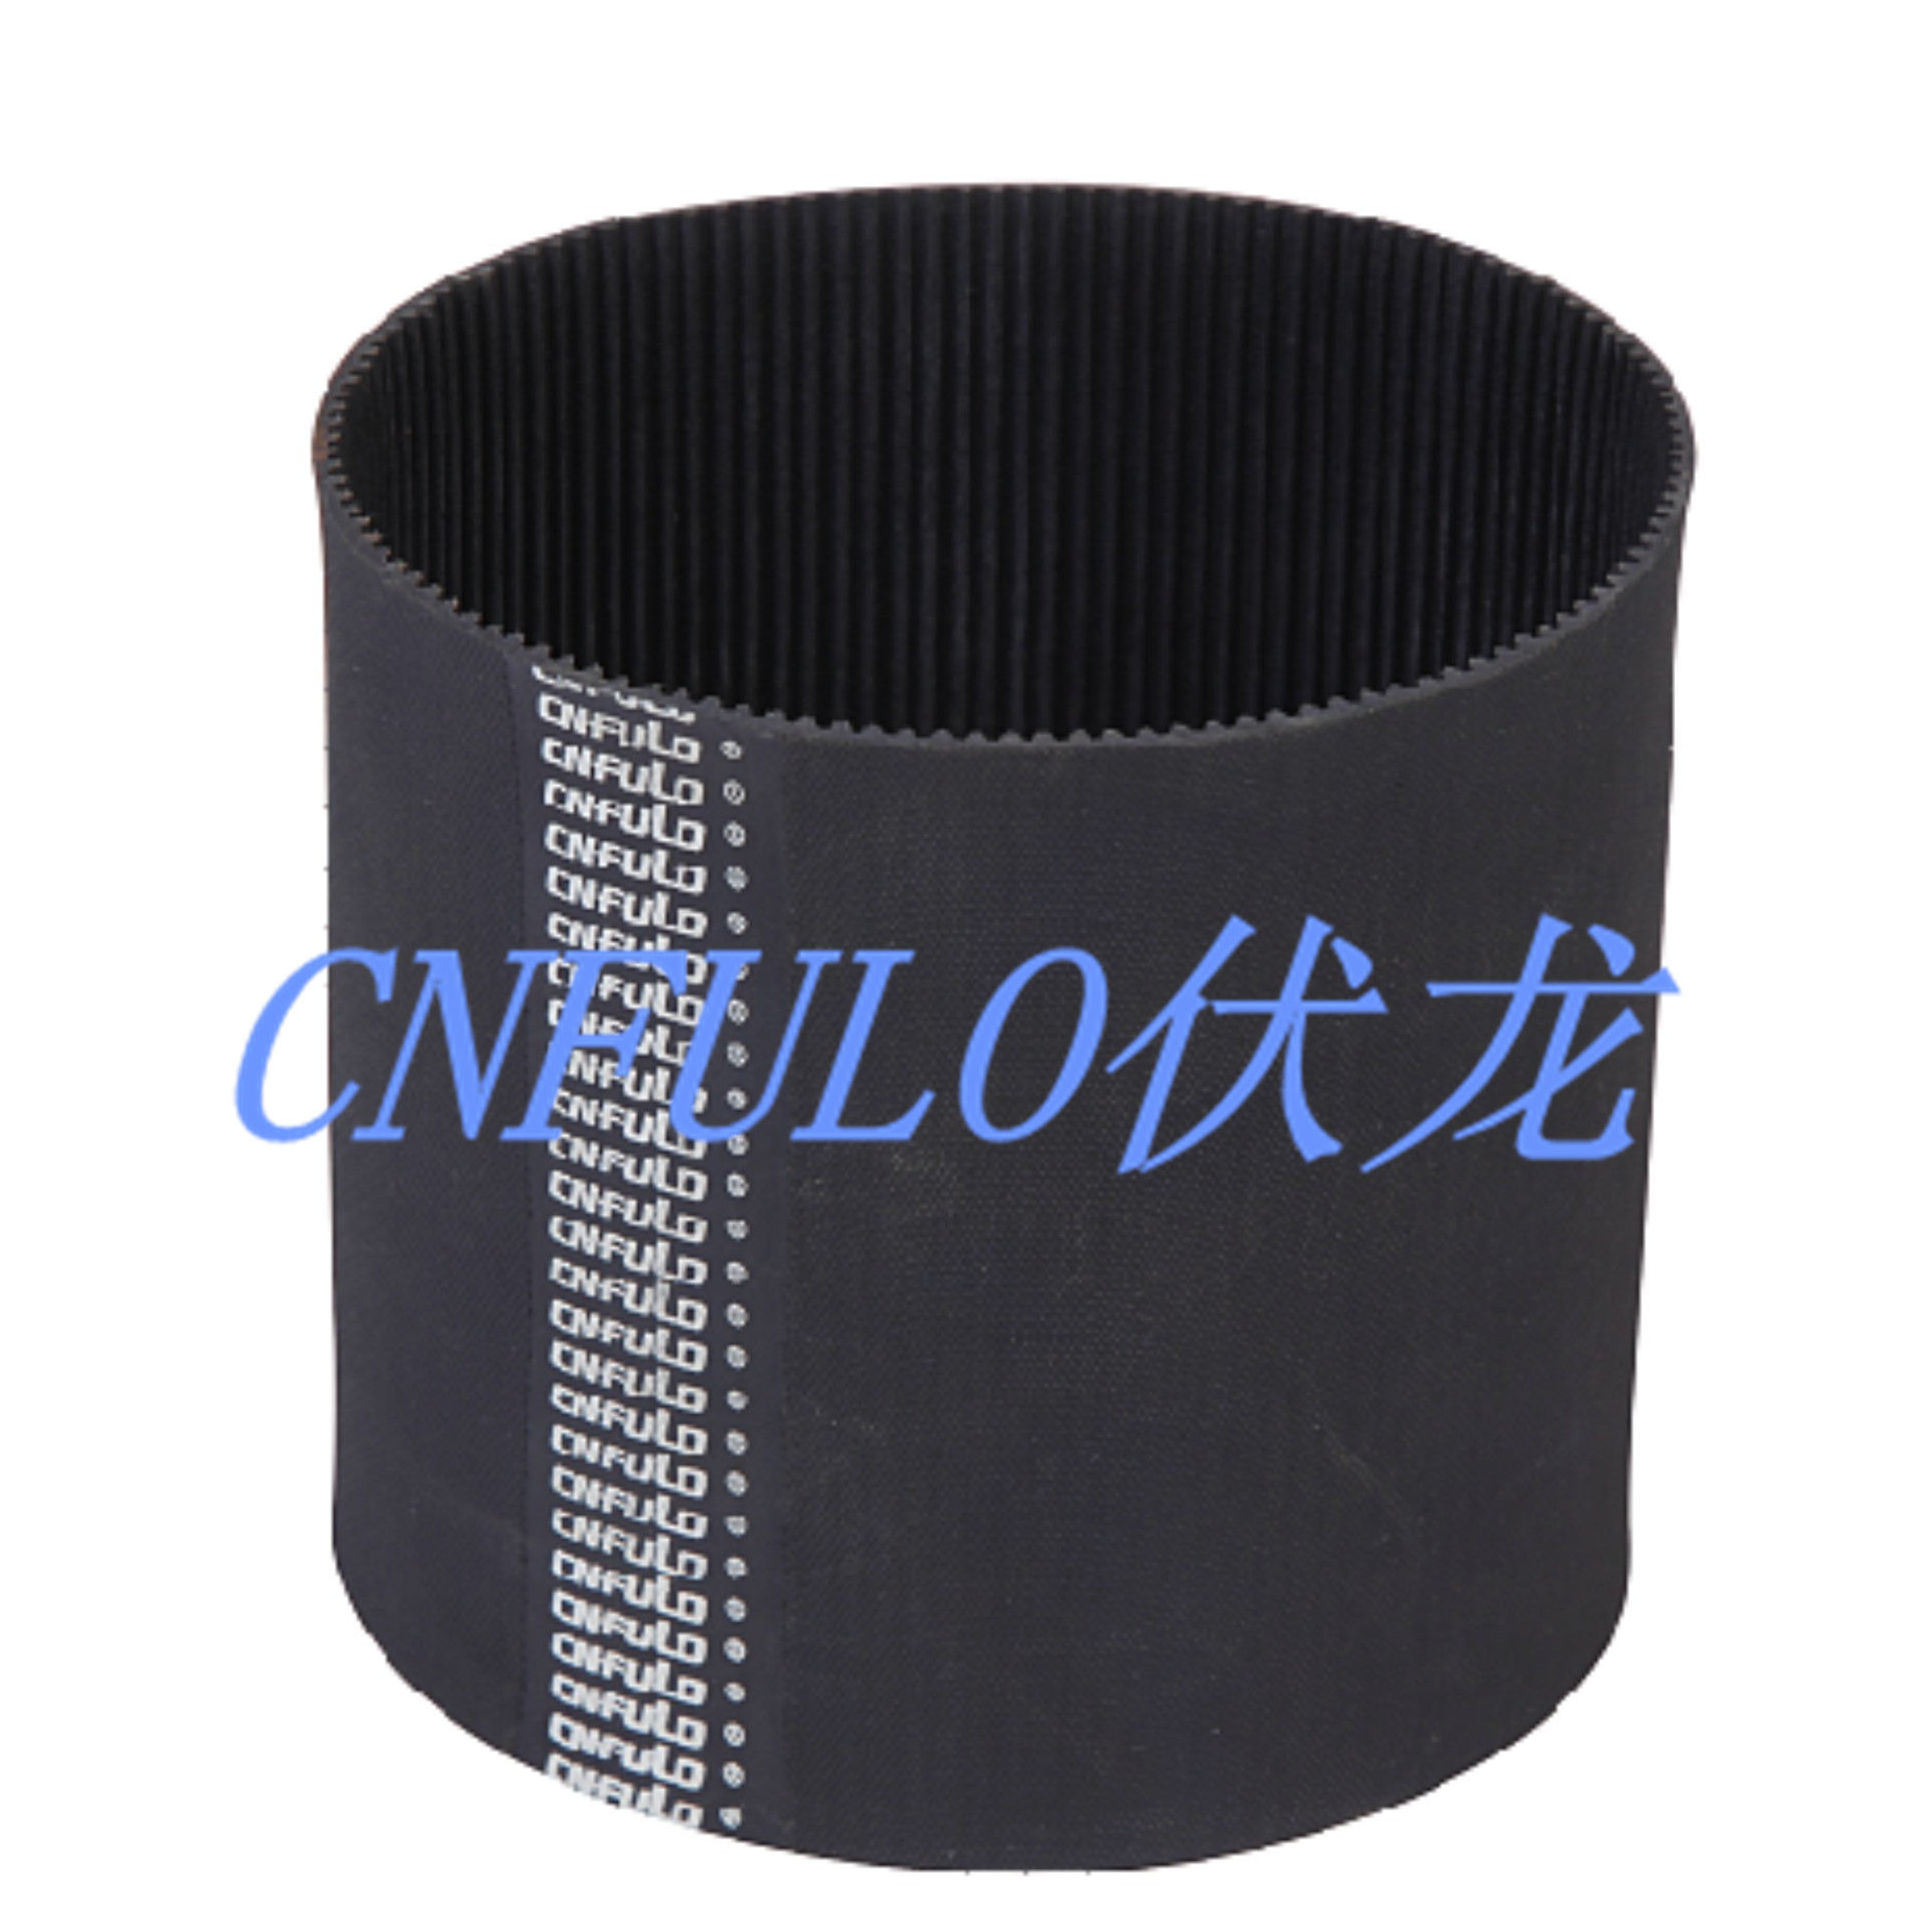 Industrial Rubber Timing Belt, Power Transmission/Texitle/Printer Belt, 304xl